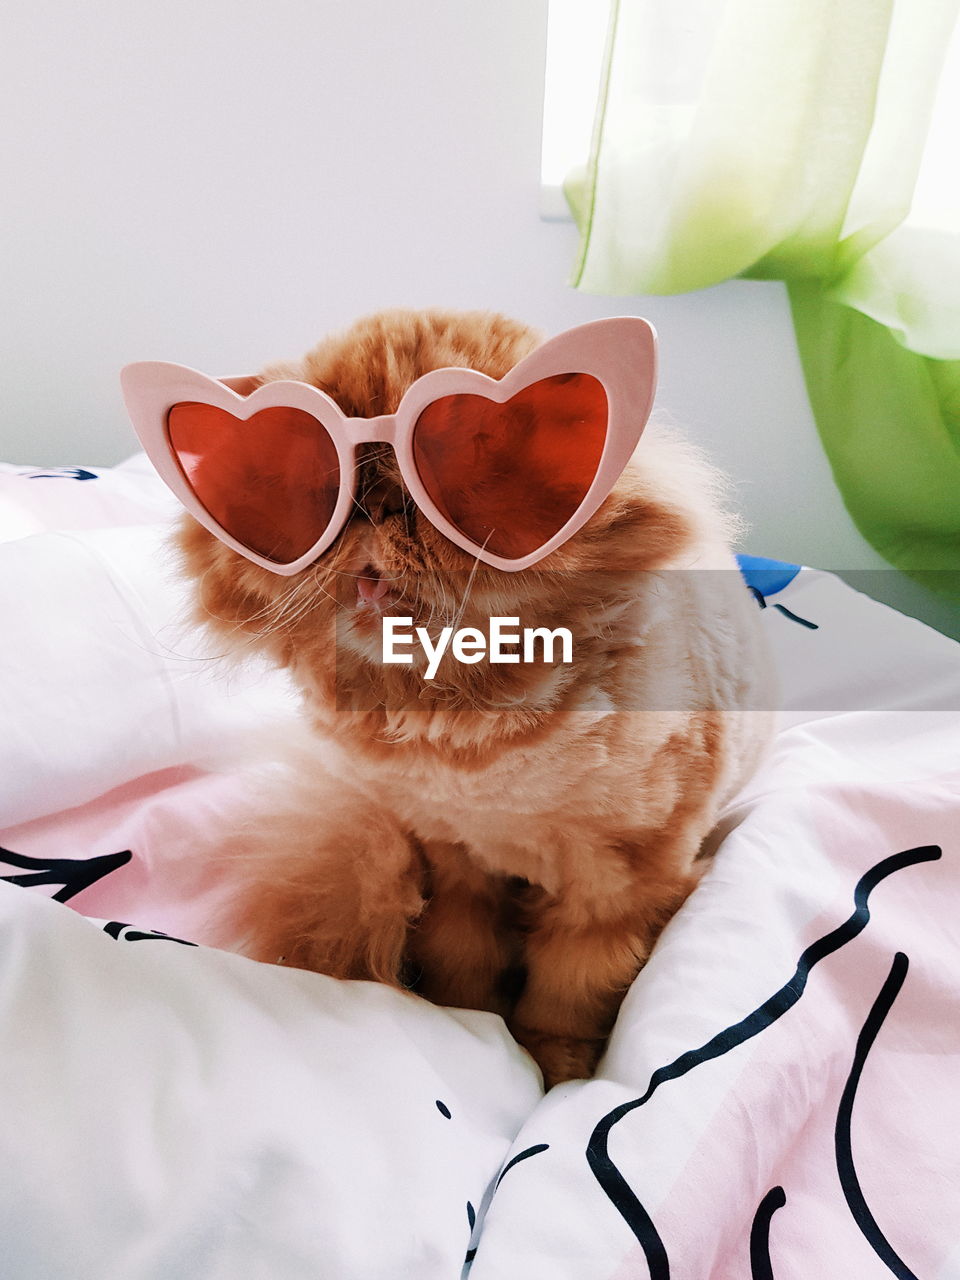 Cat wearing heart shape sunglasses